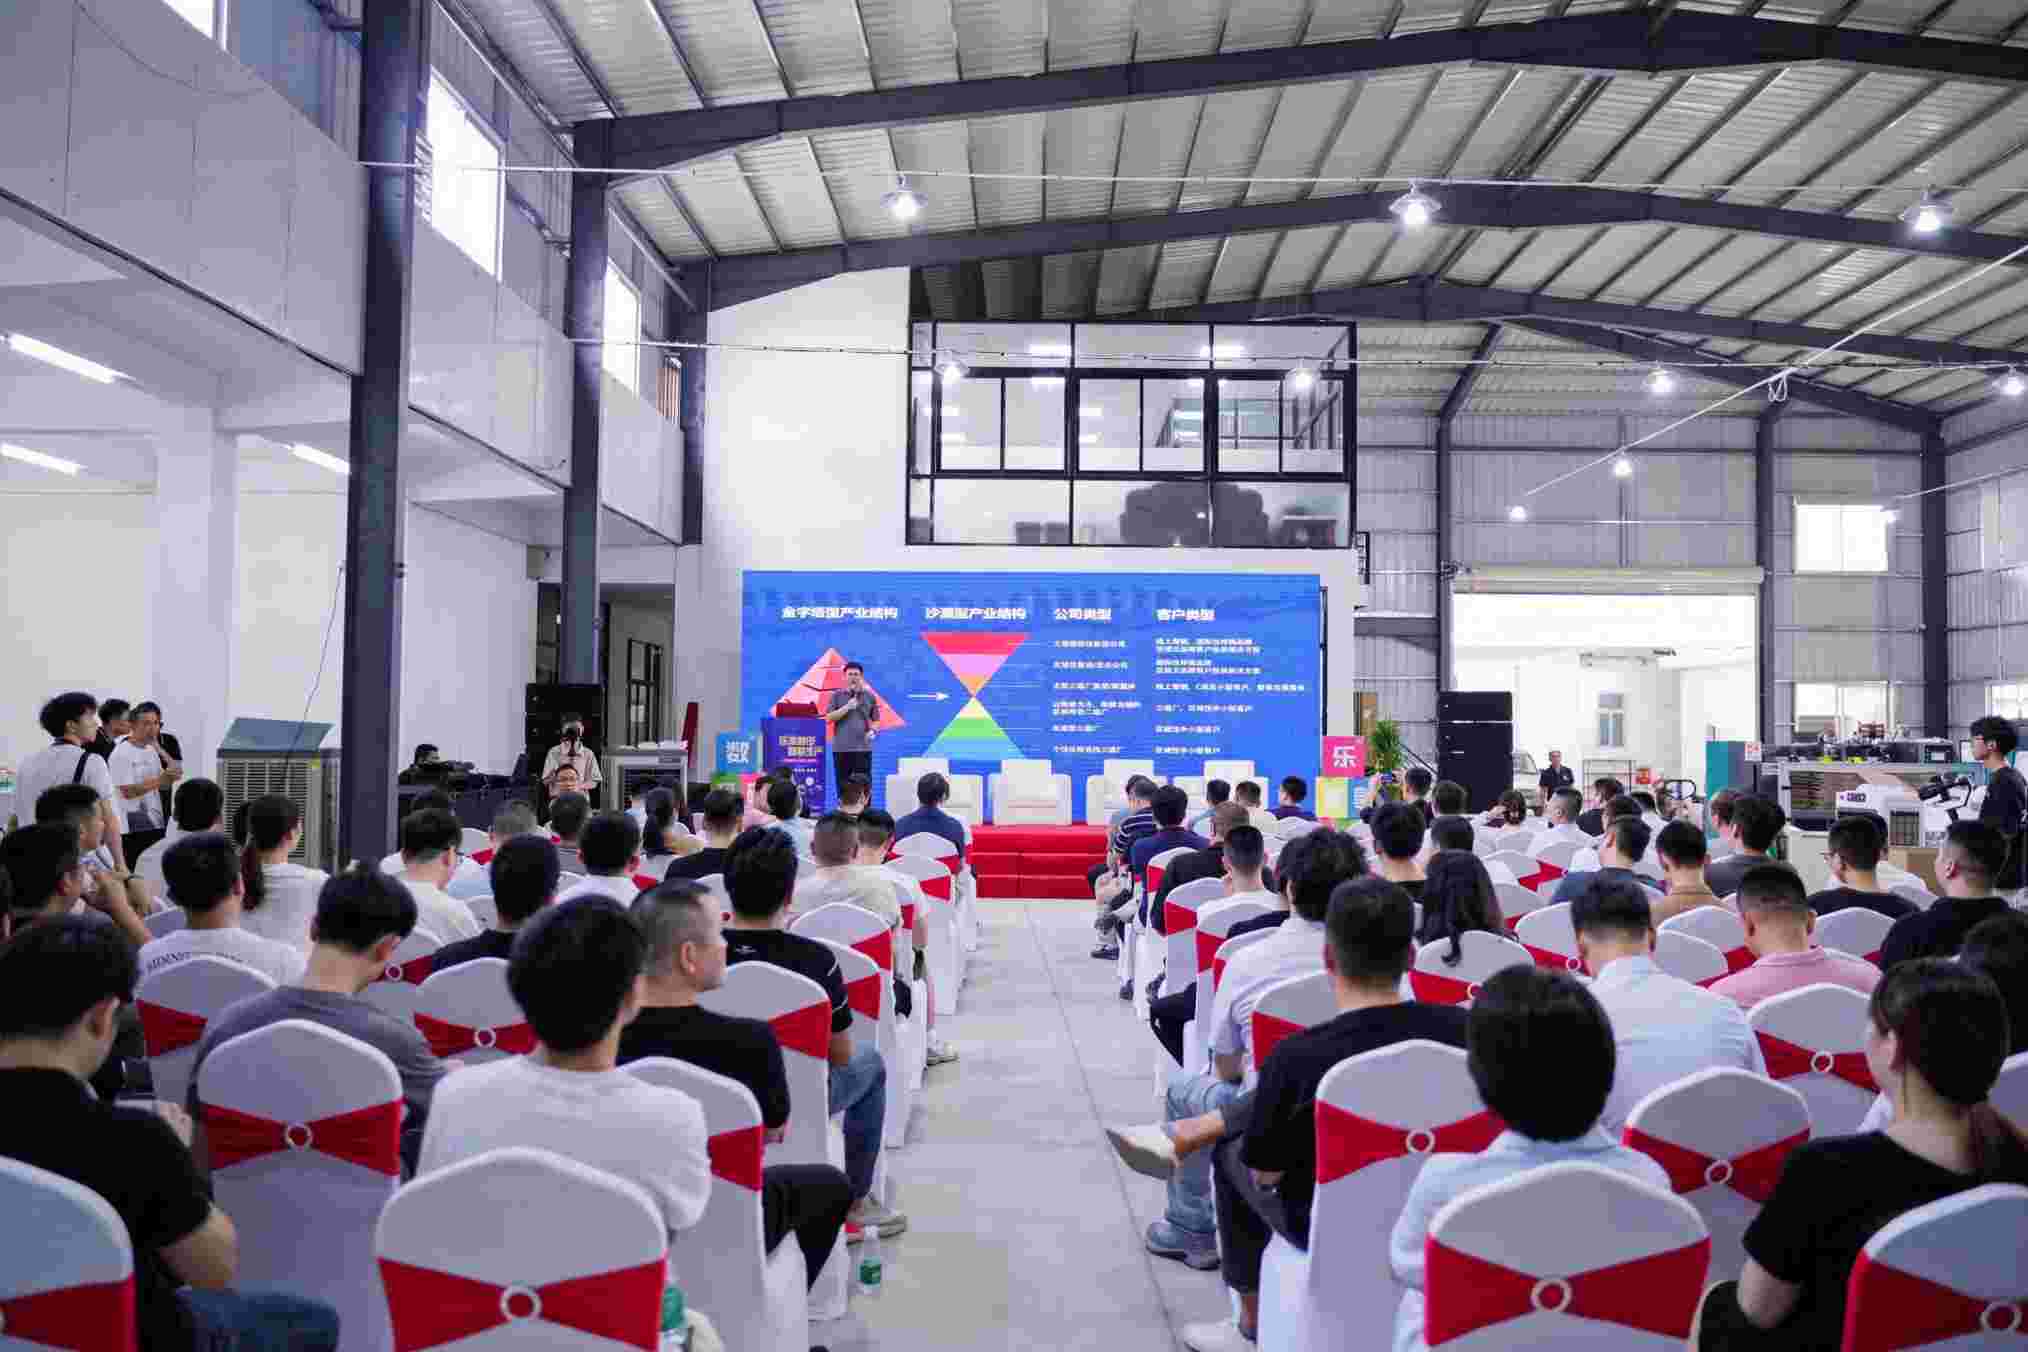 【LE XIANG BAO ZHUANG Factory Open Day】 Explore the digital “wisdom” manufacturing, enter Wonder customer sample factory